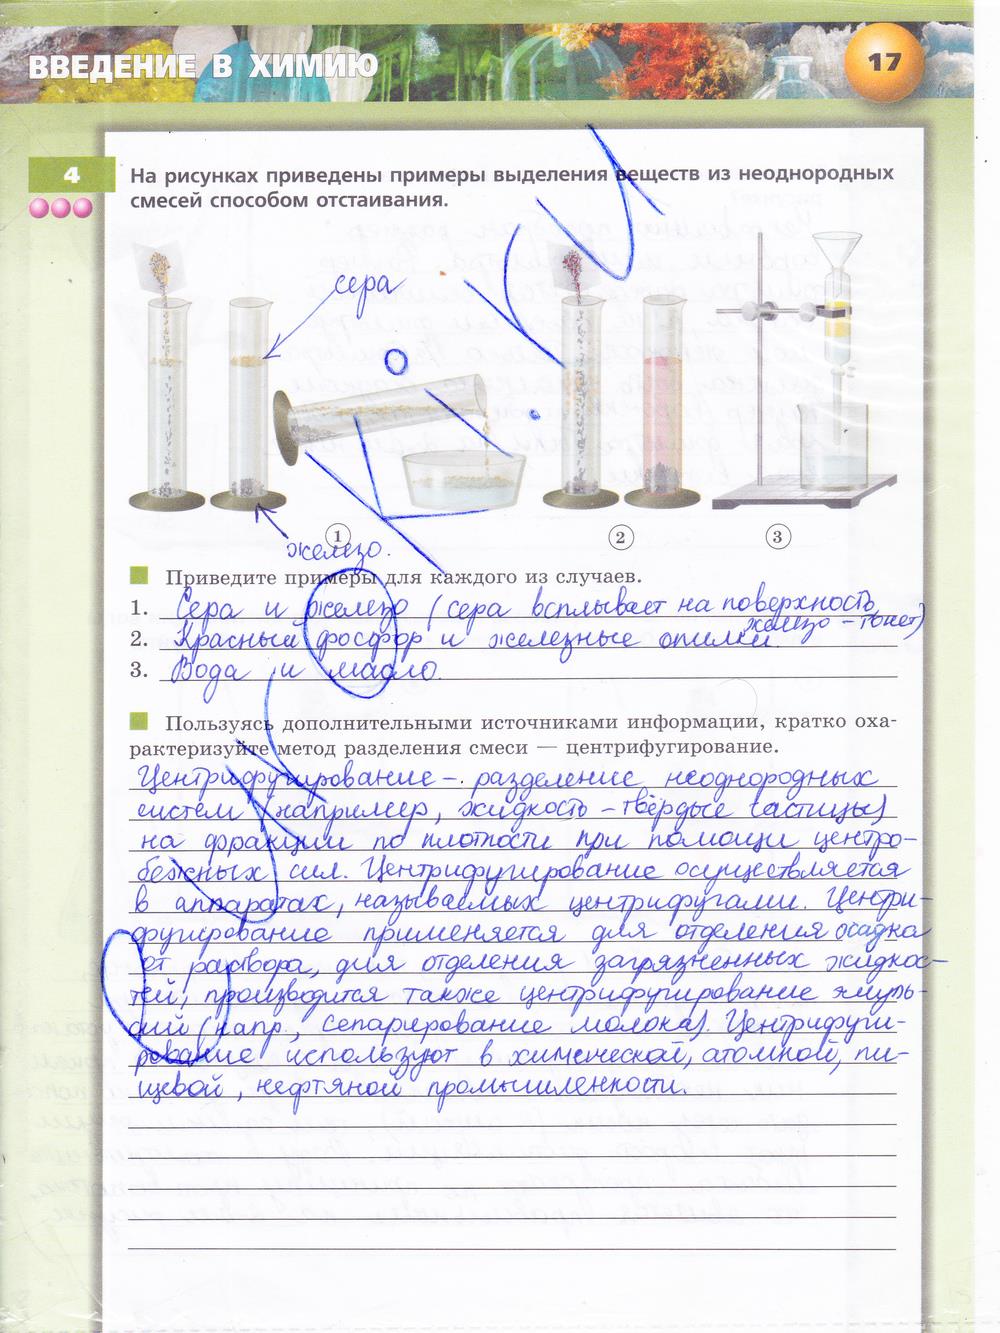 гдз 8 класс тетрадь-тренажёр страница 17 химия Гара